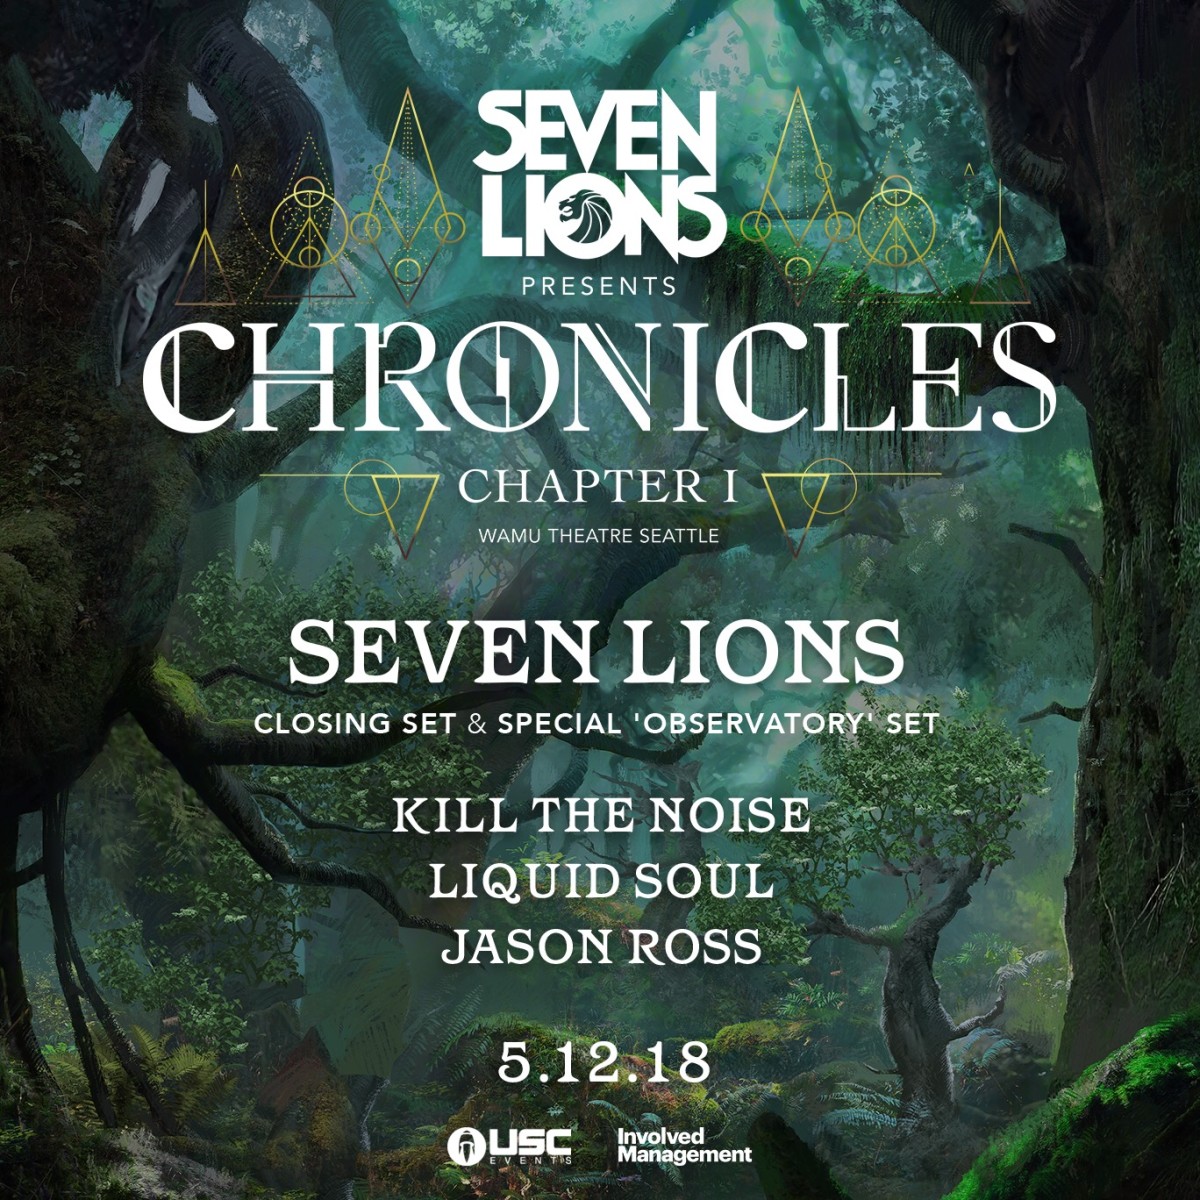 Seven Lions Chronicles